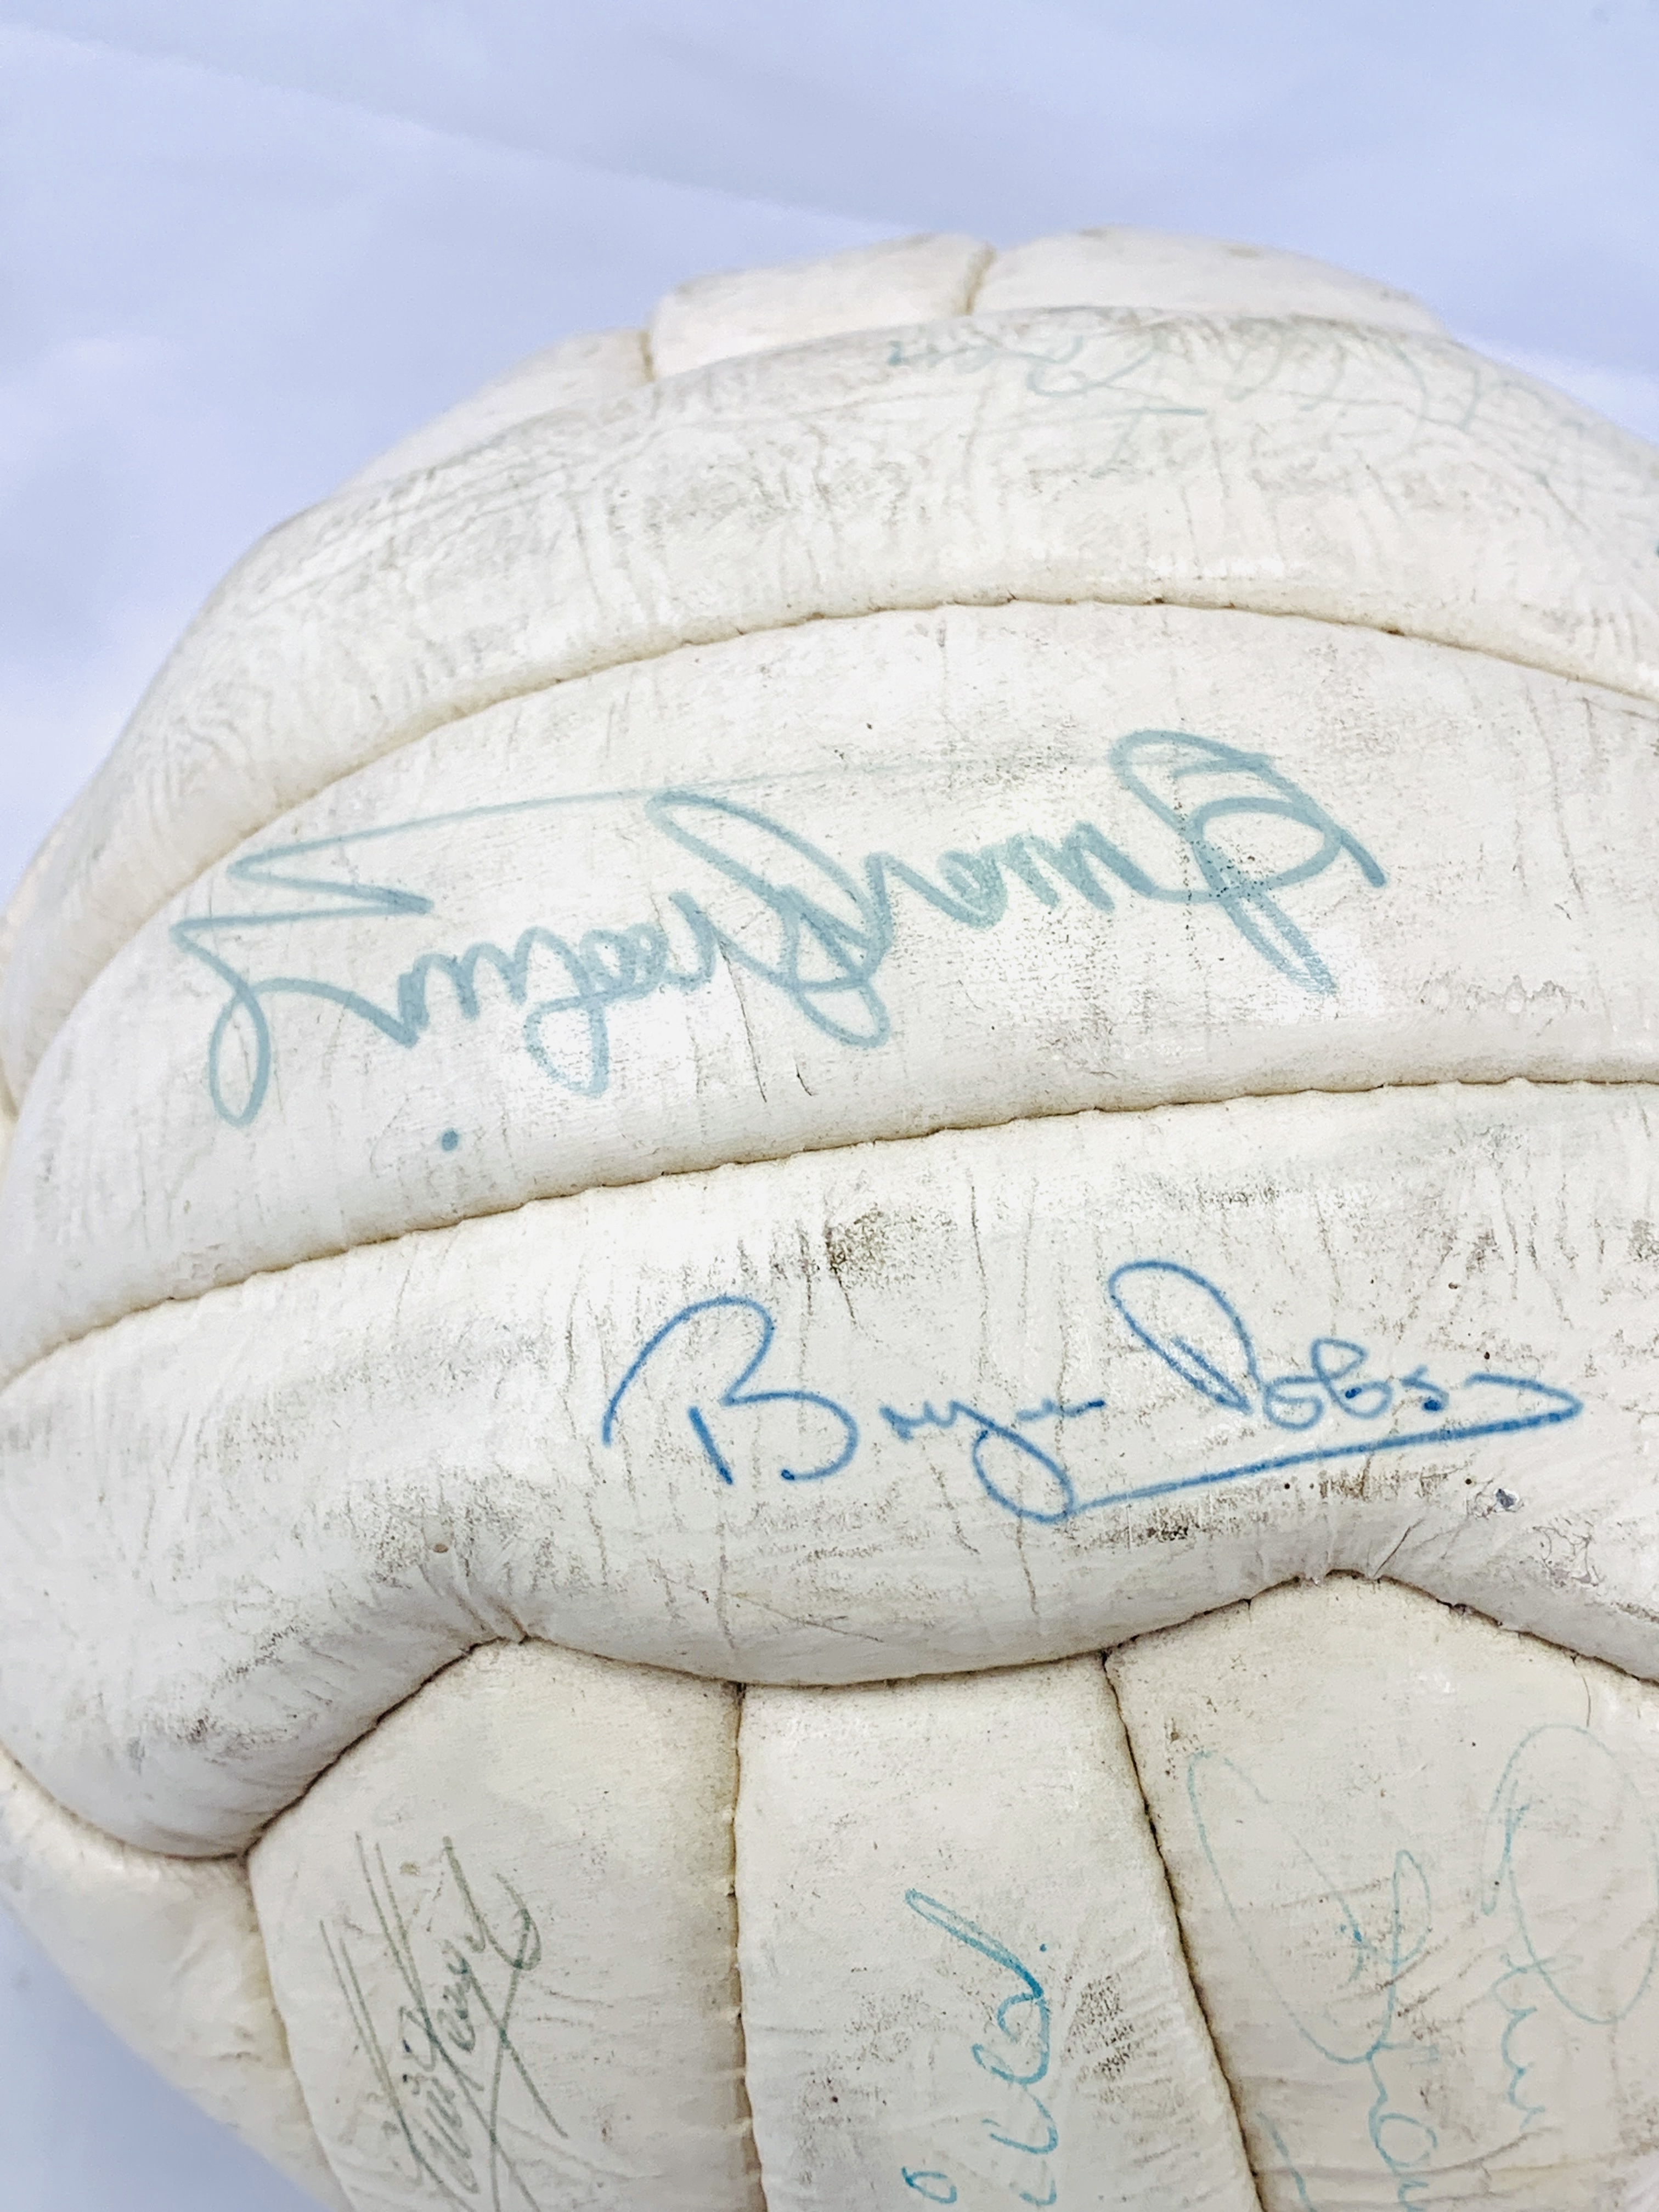 Signed Mitre 5 football with original signatures of 1980's era England football team - Image 2 of 5